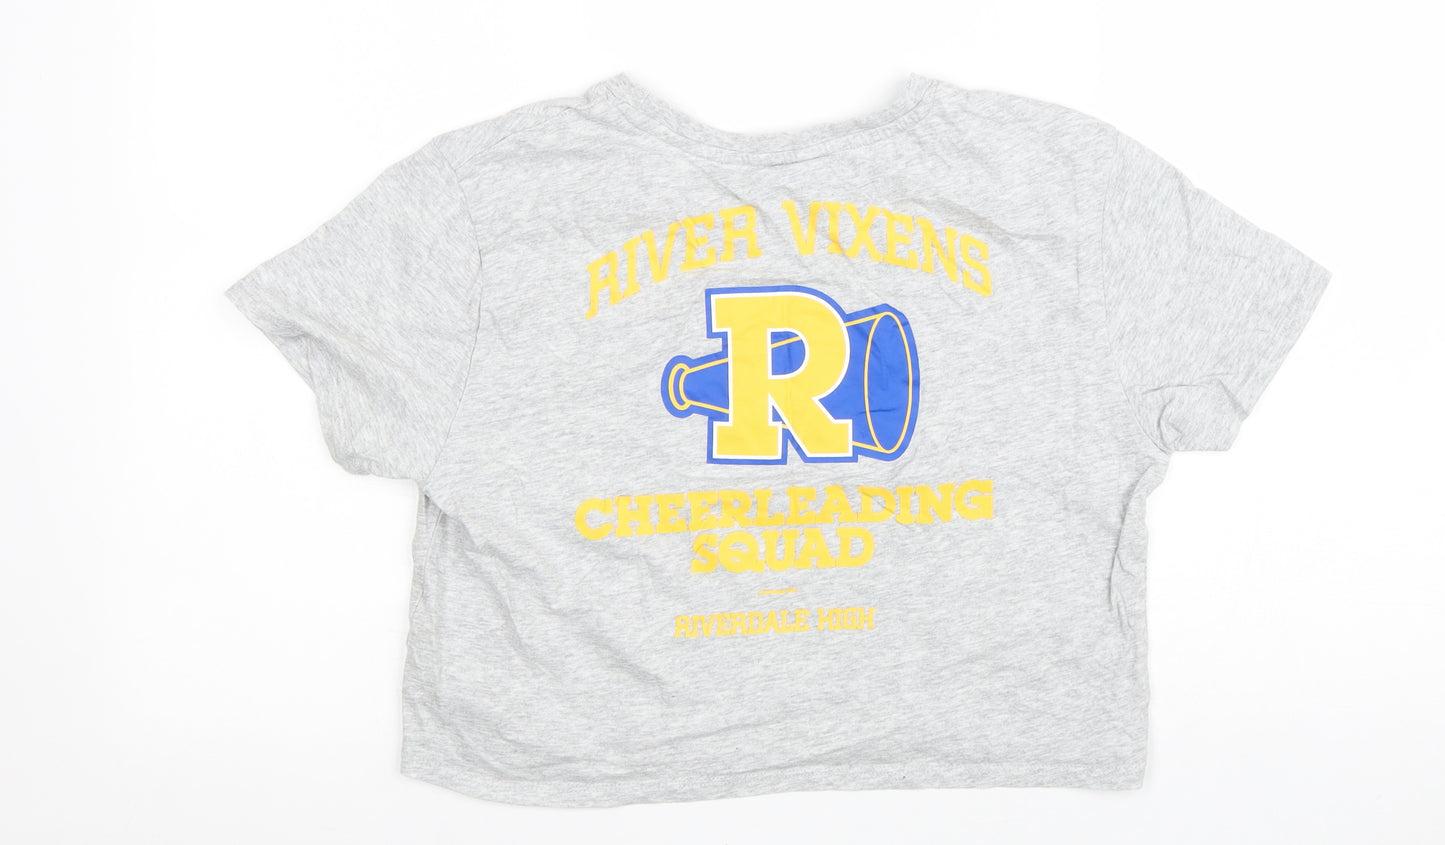 Riverdale Womens Grey Cotton Basic T-Shirt Size M Round Neck